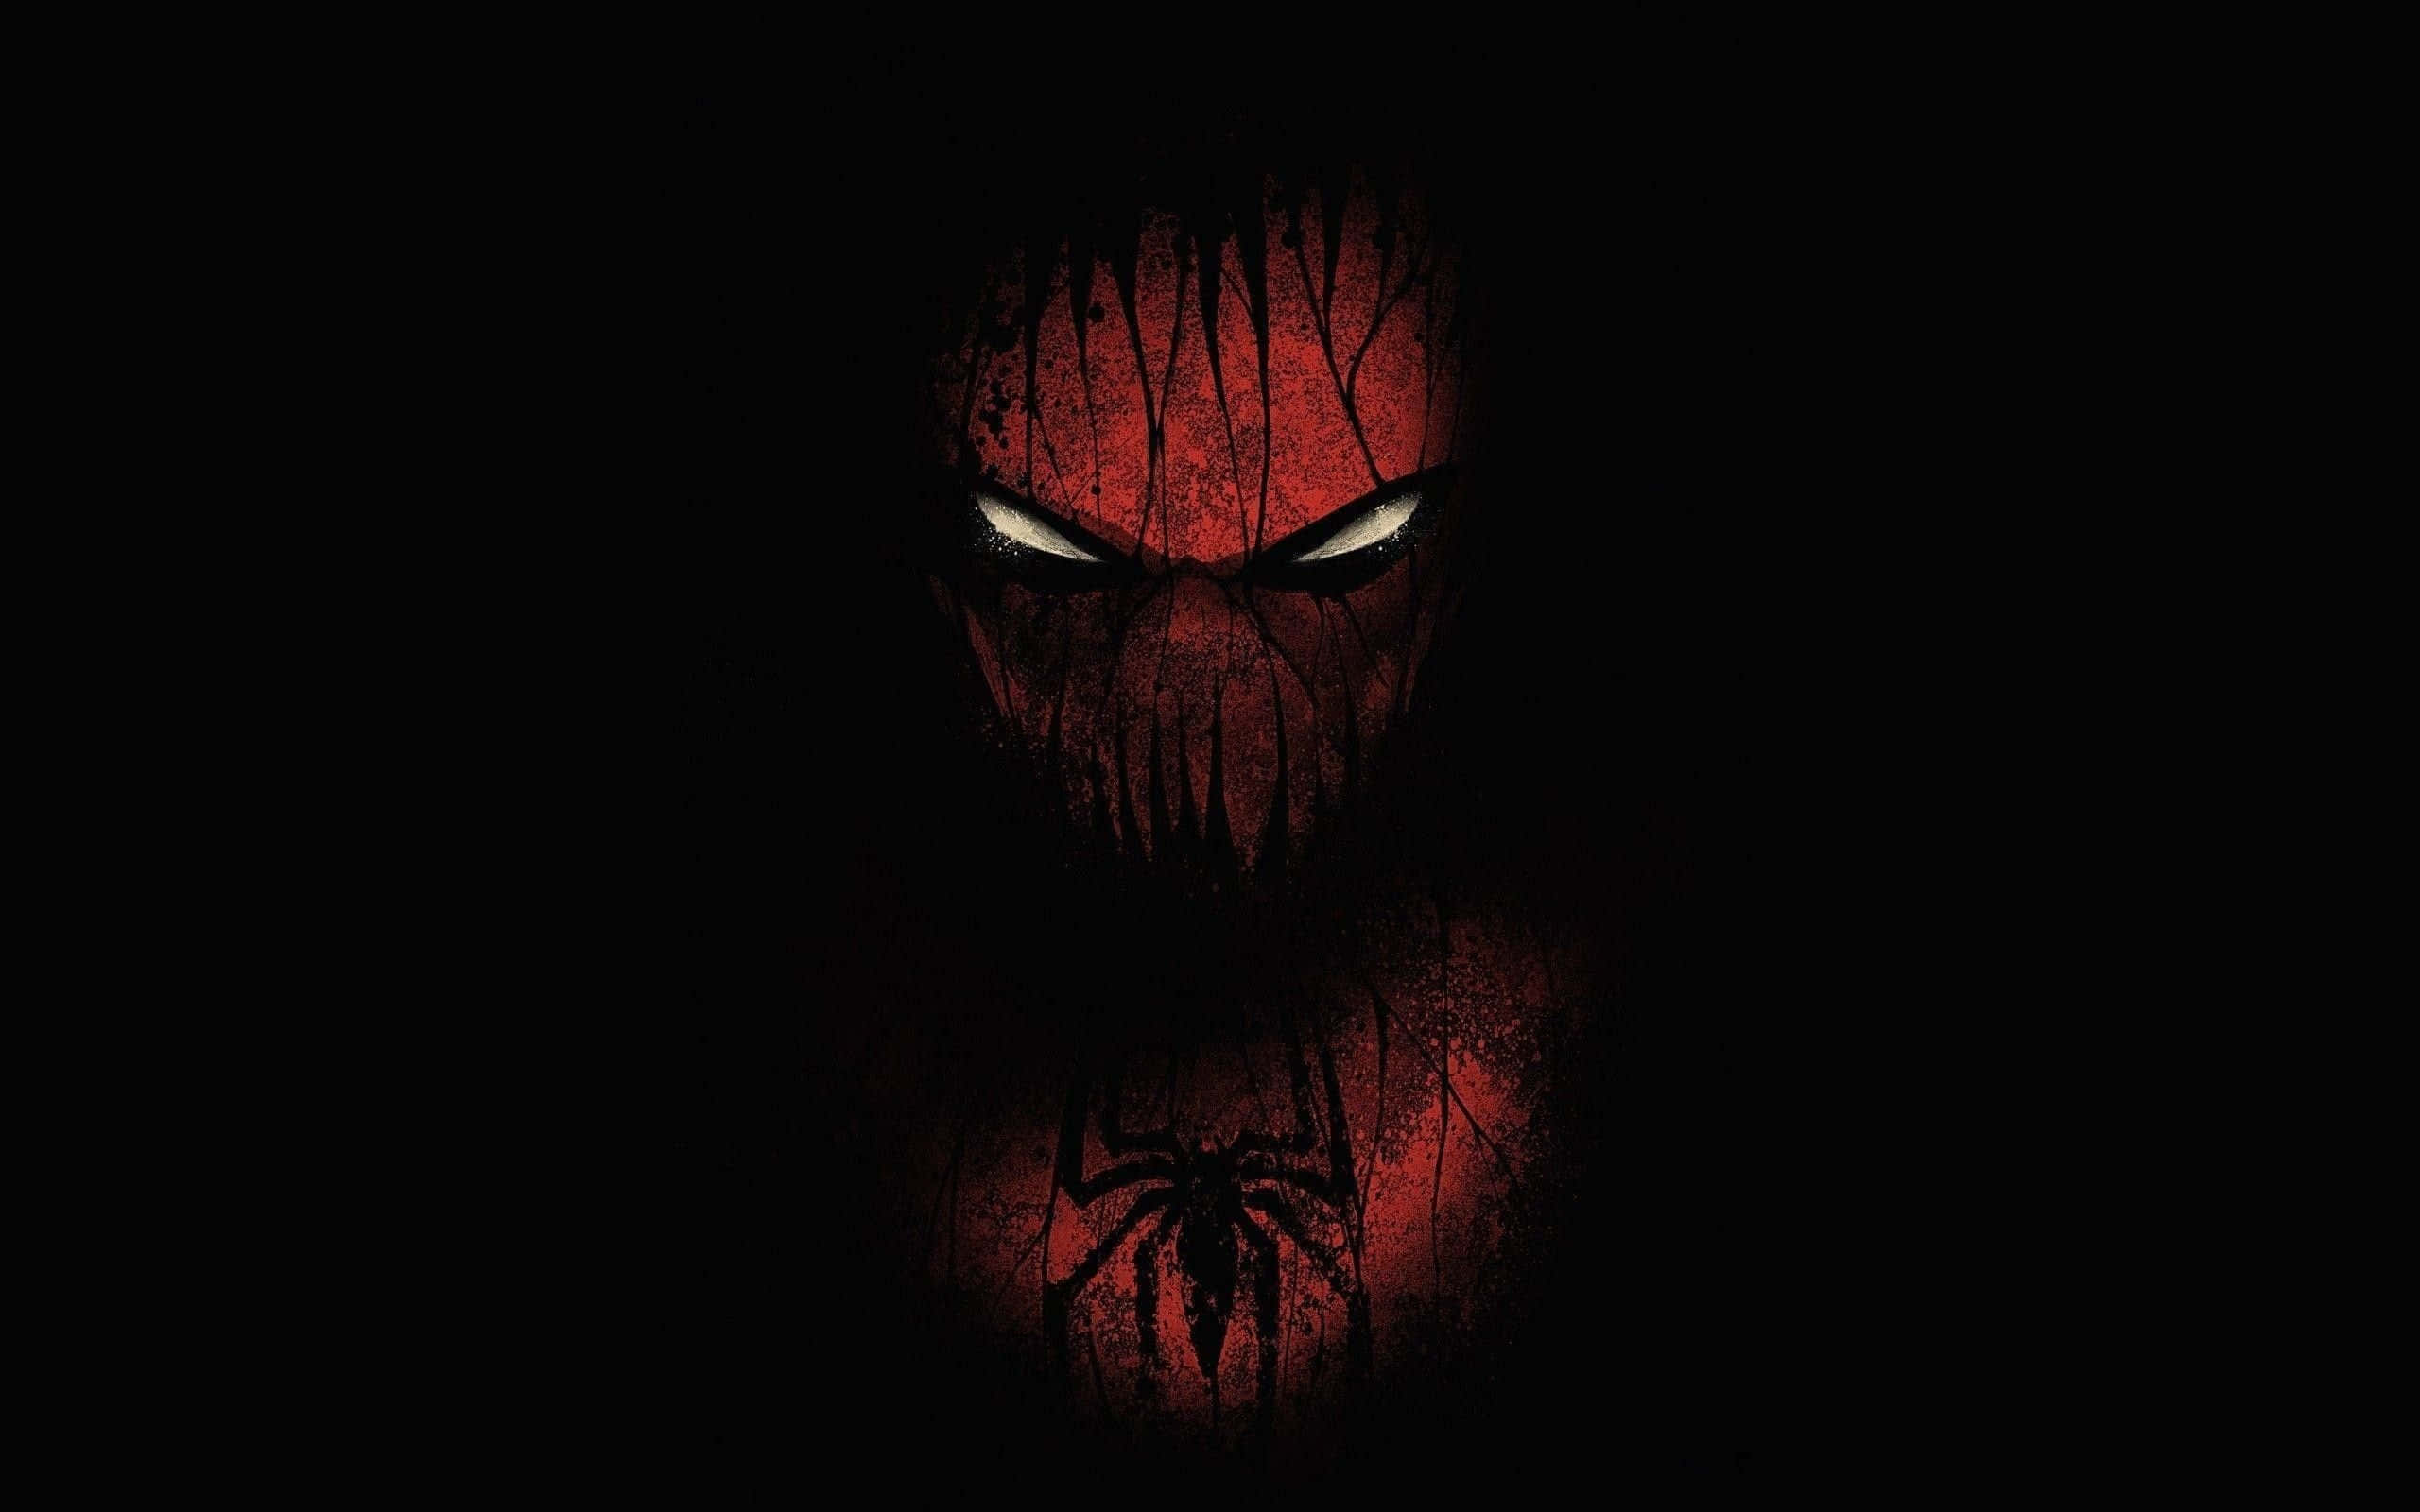 Spider - Man In The Dark With Red Eyes